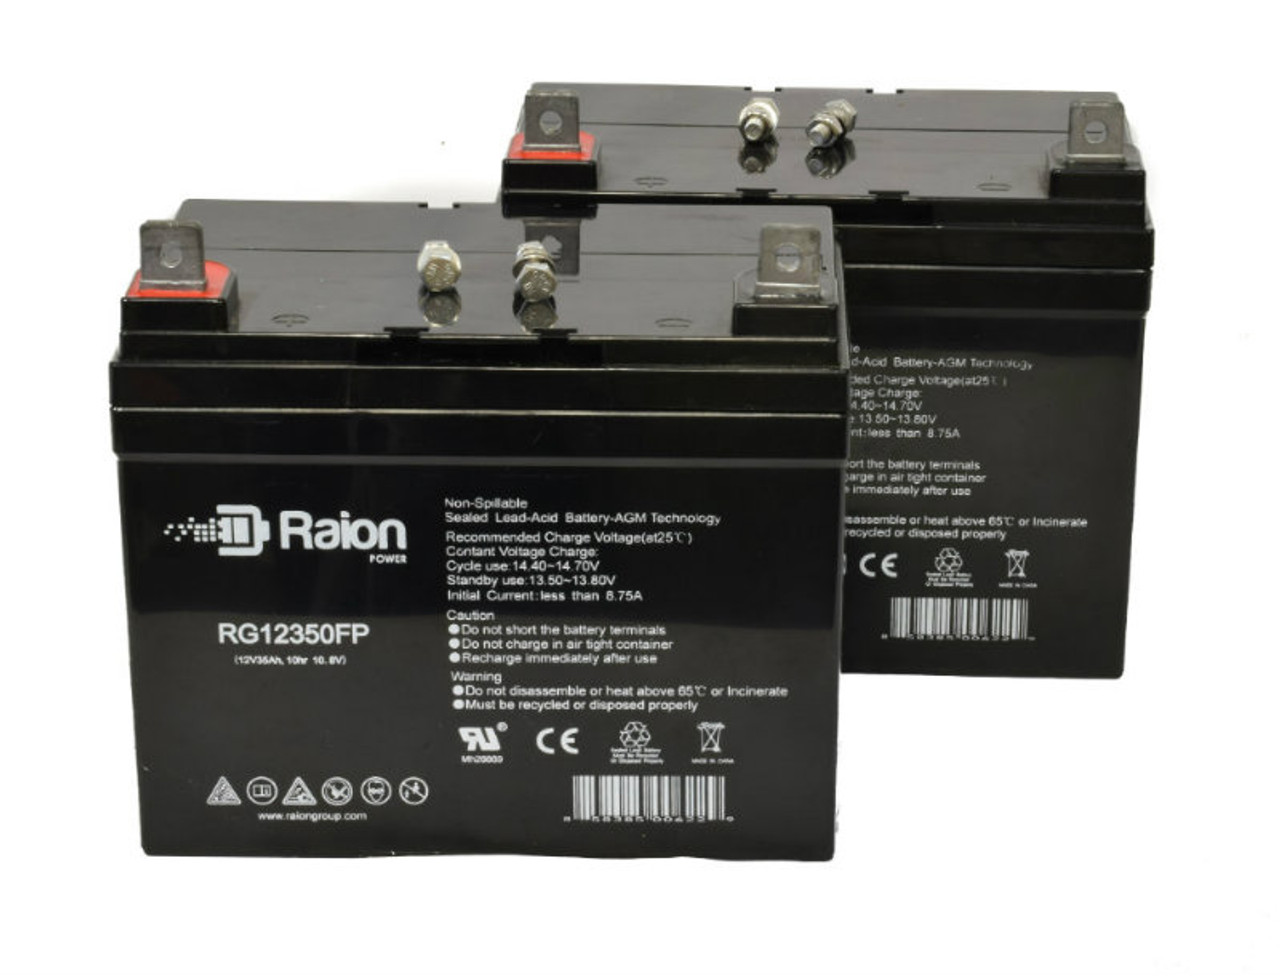 Raion Power Replacement 12V 35Ah Lawn Mower Battery for Bunton BBK36 - 2 Pack